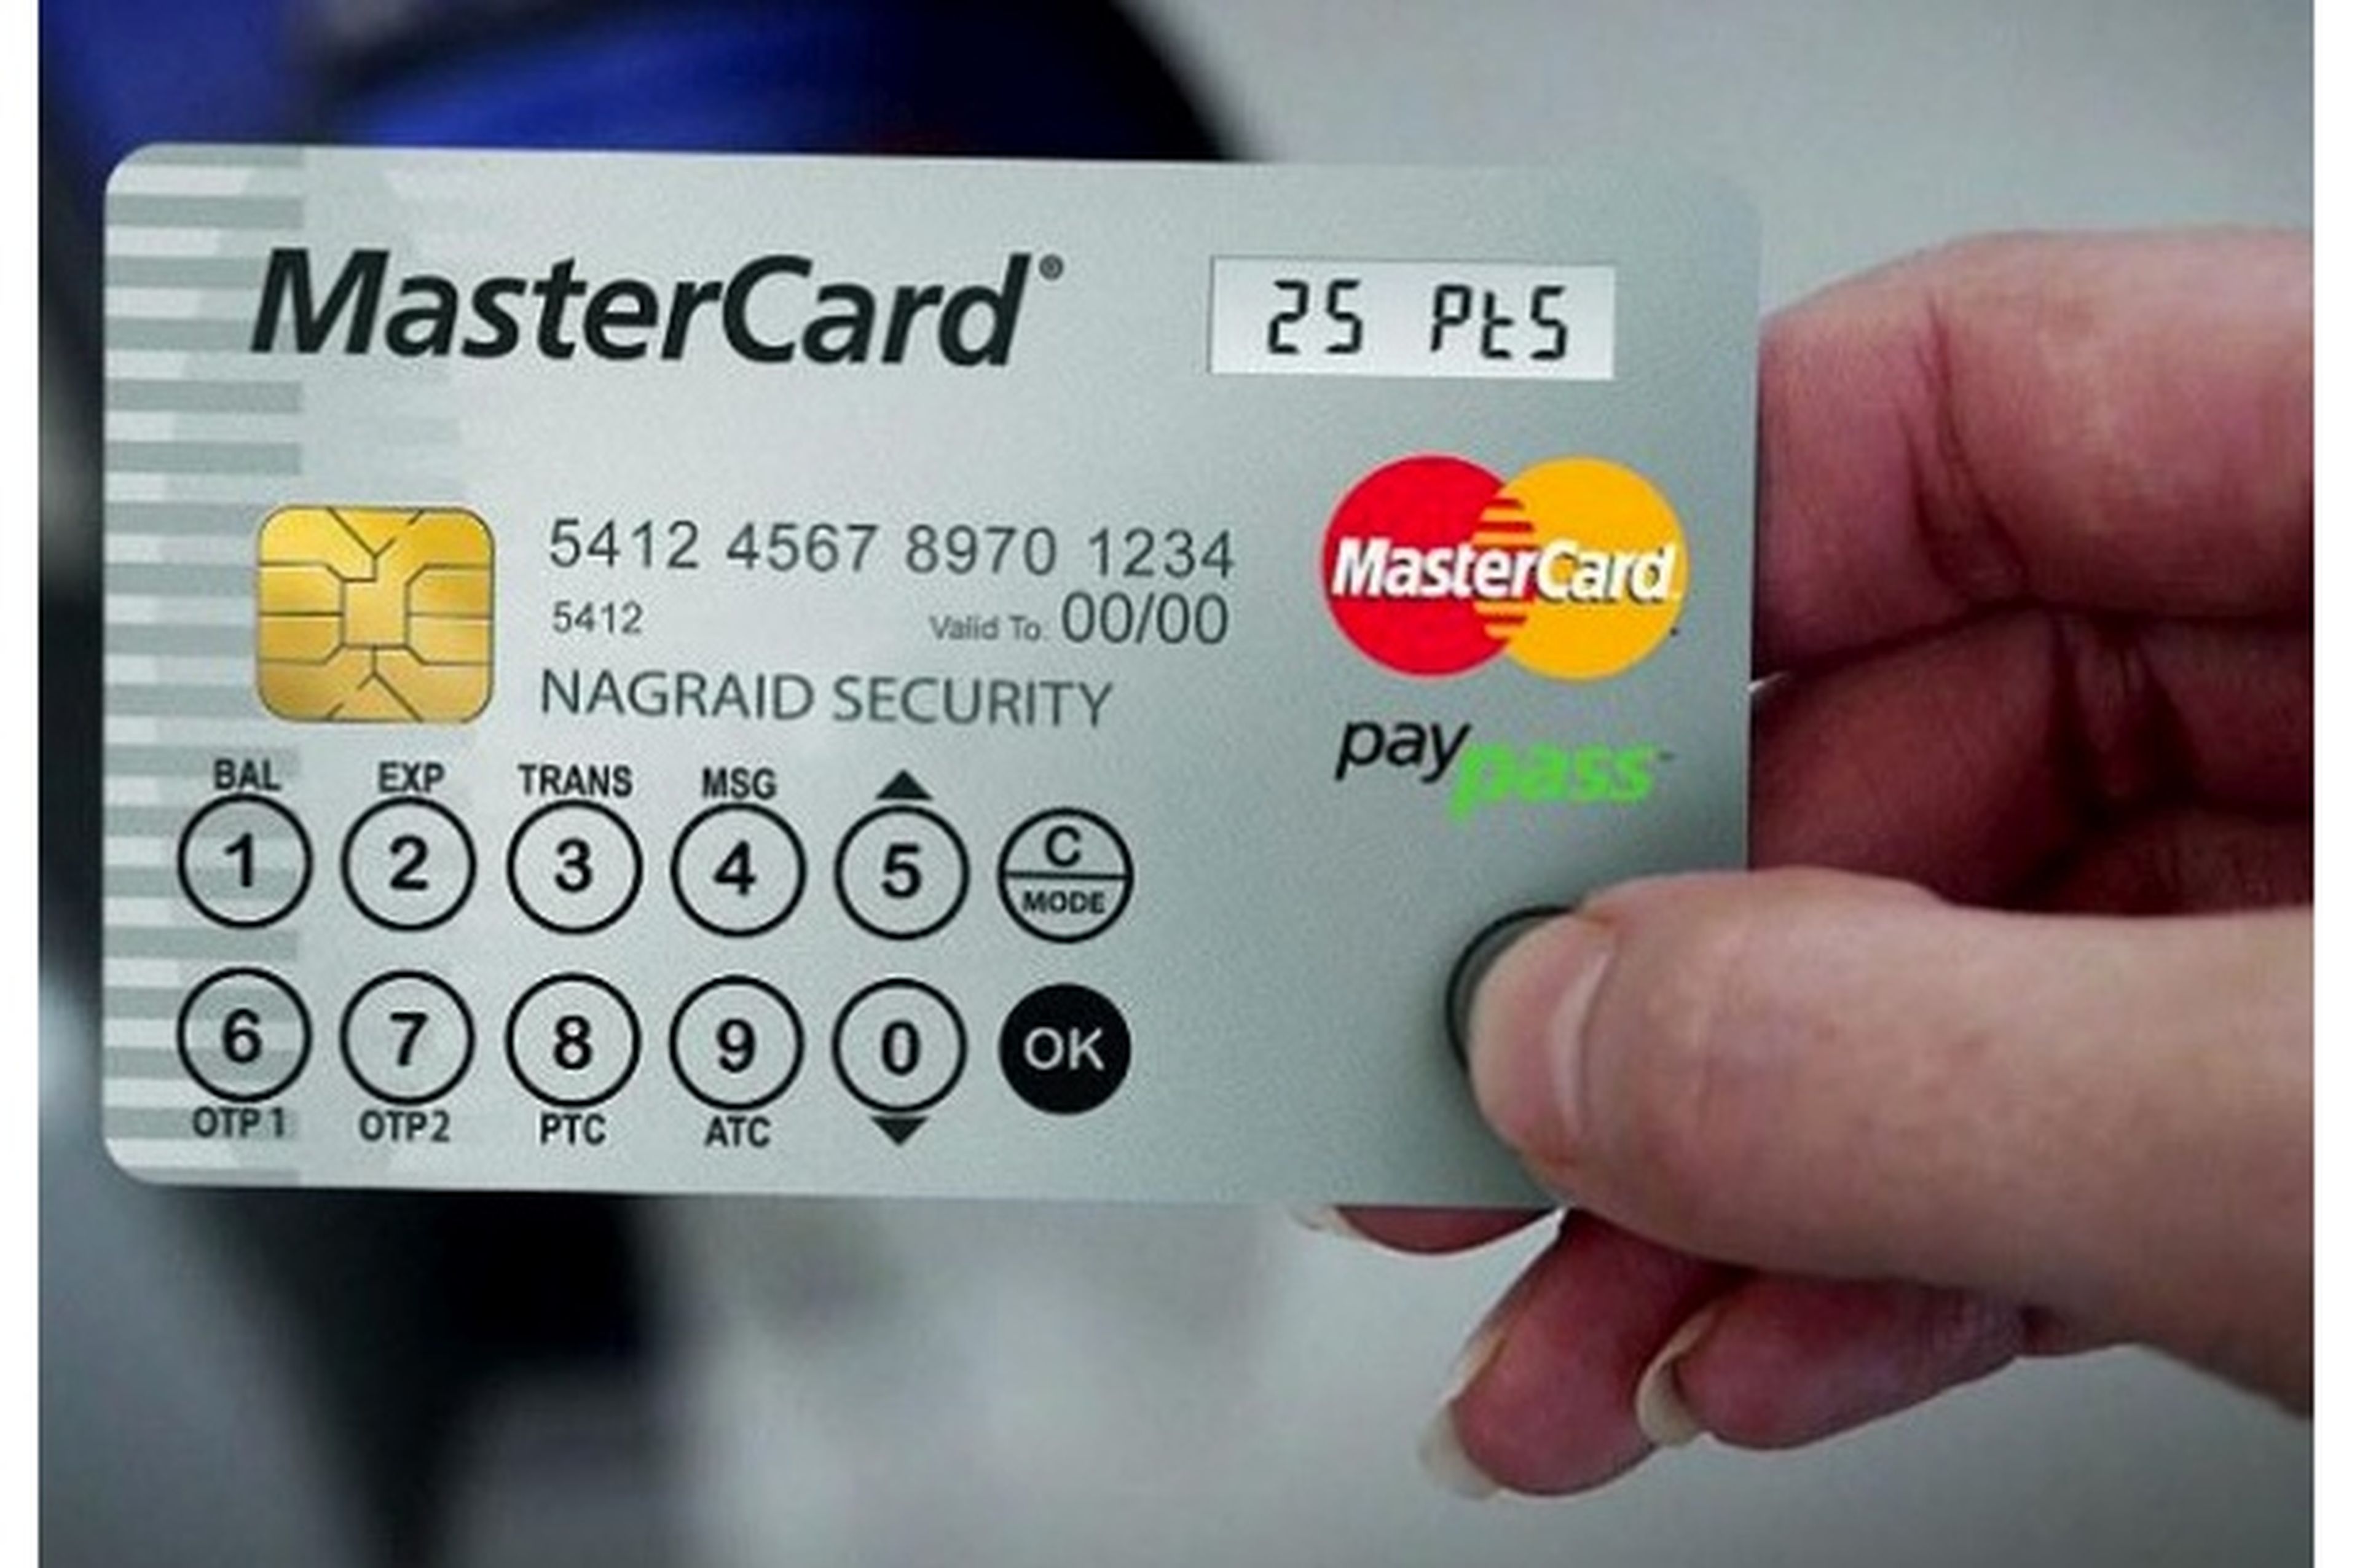 Mastercard lanza una tarjeta con pantalla LCD